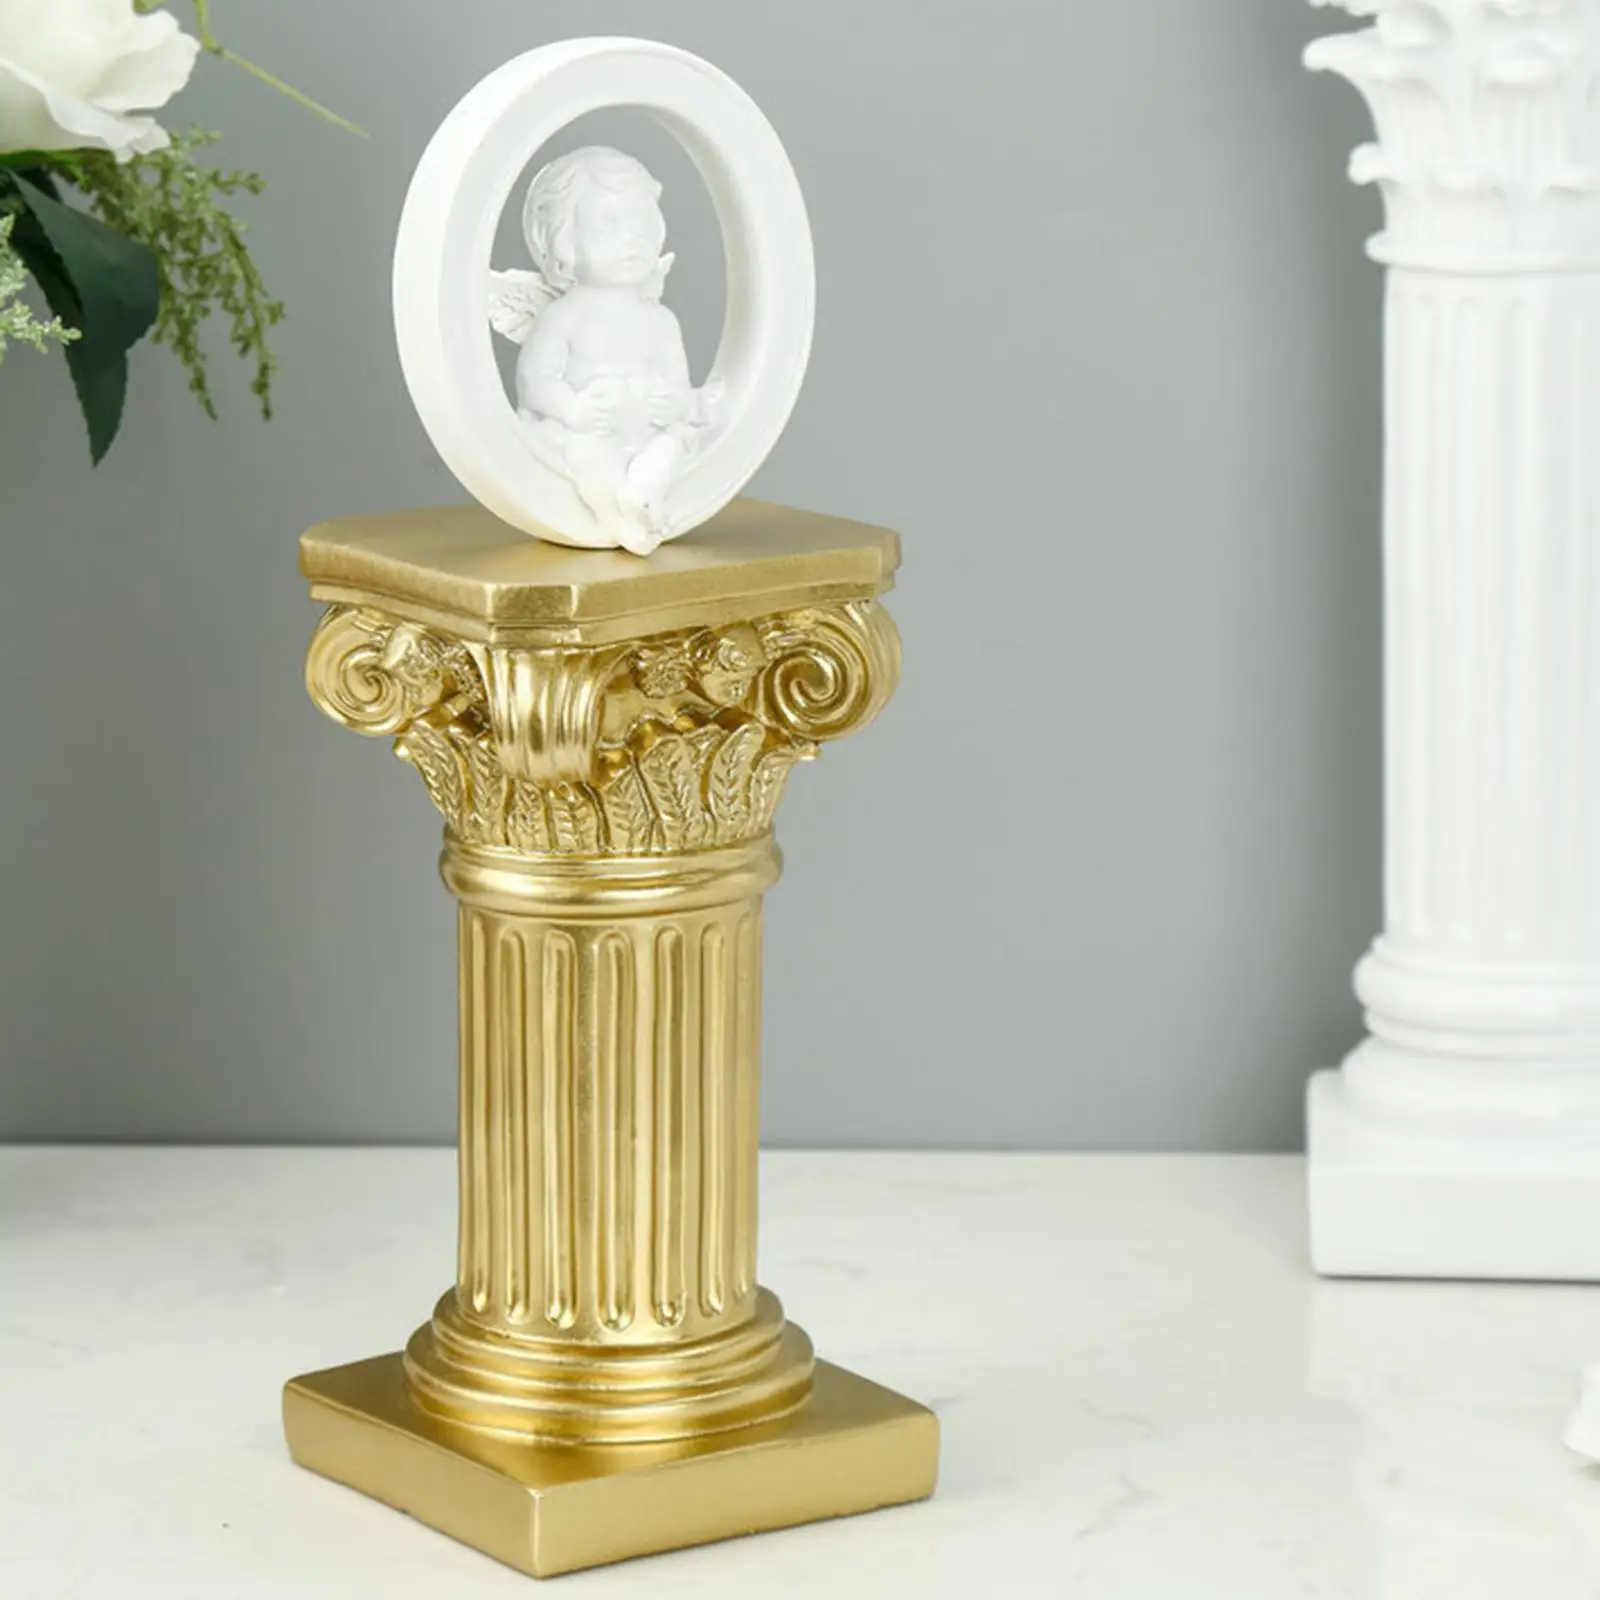 Roman Column Statue Miniature Figurine Ornament for Party Wedding Decoration